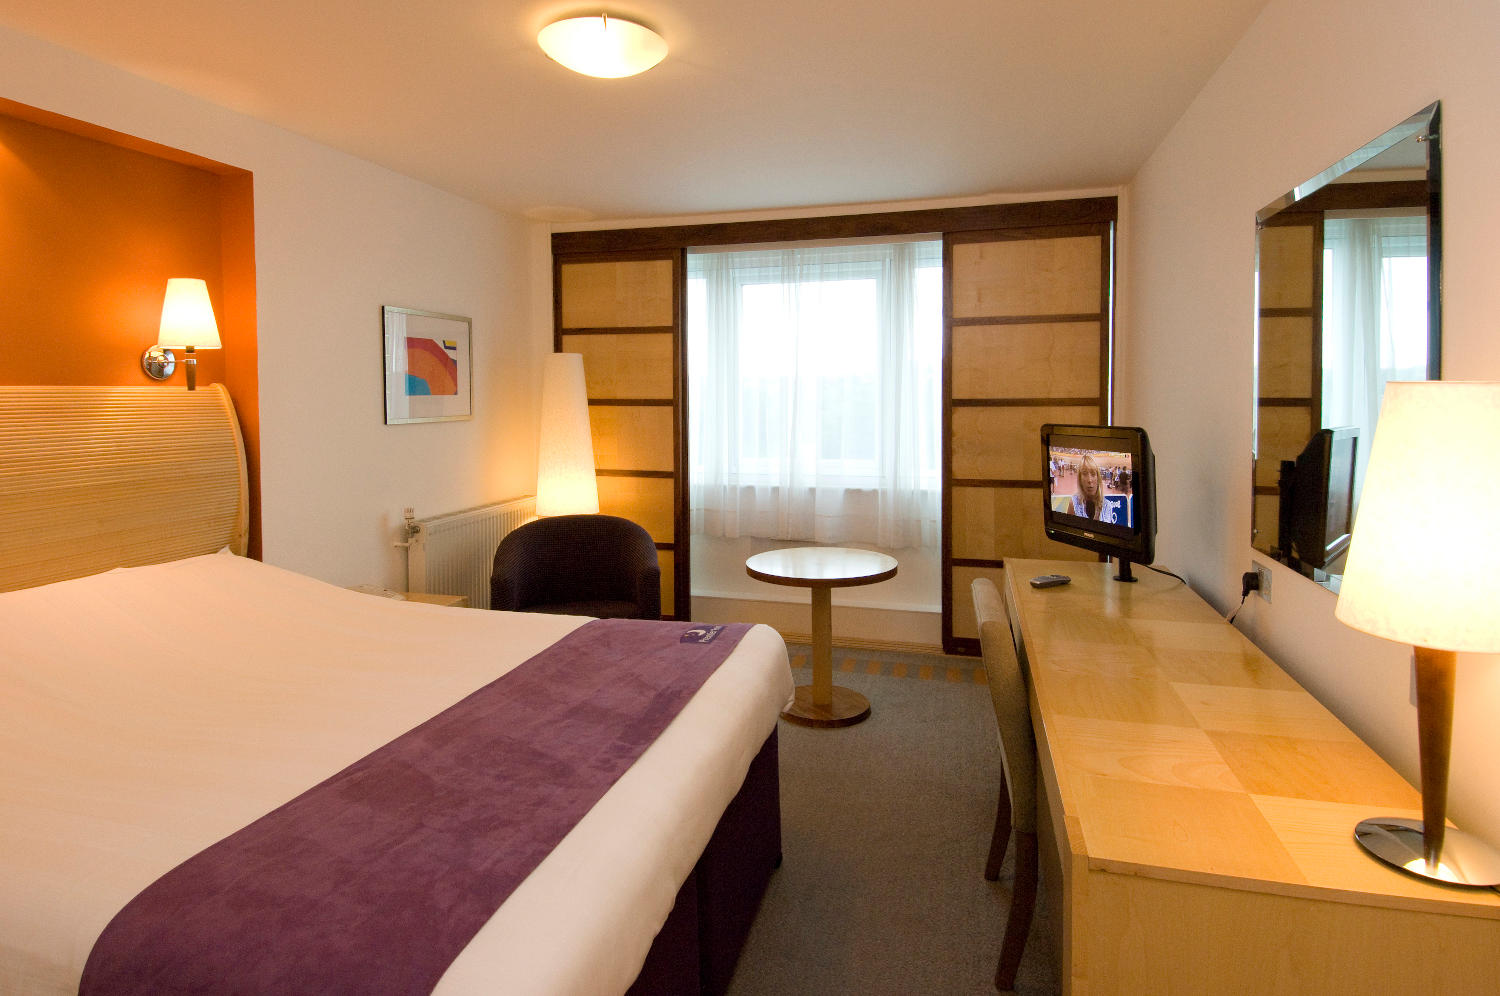 Premier Inn bedroom Premier Inn Cardiff North hotel Cardiff 03337 773984